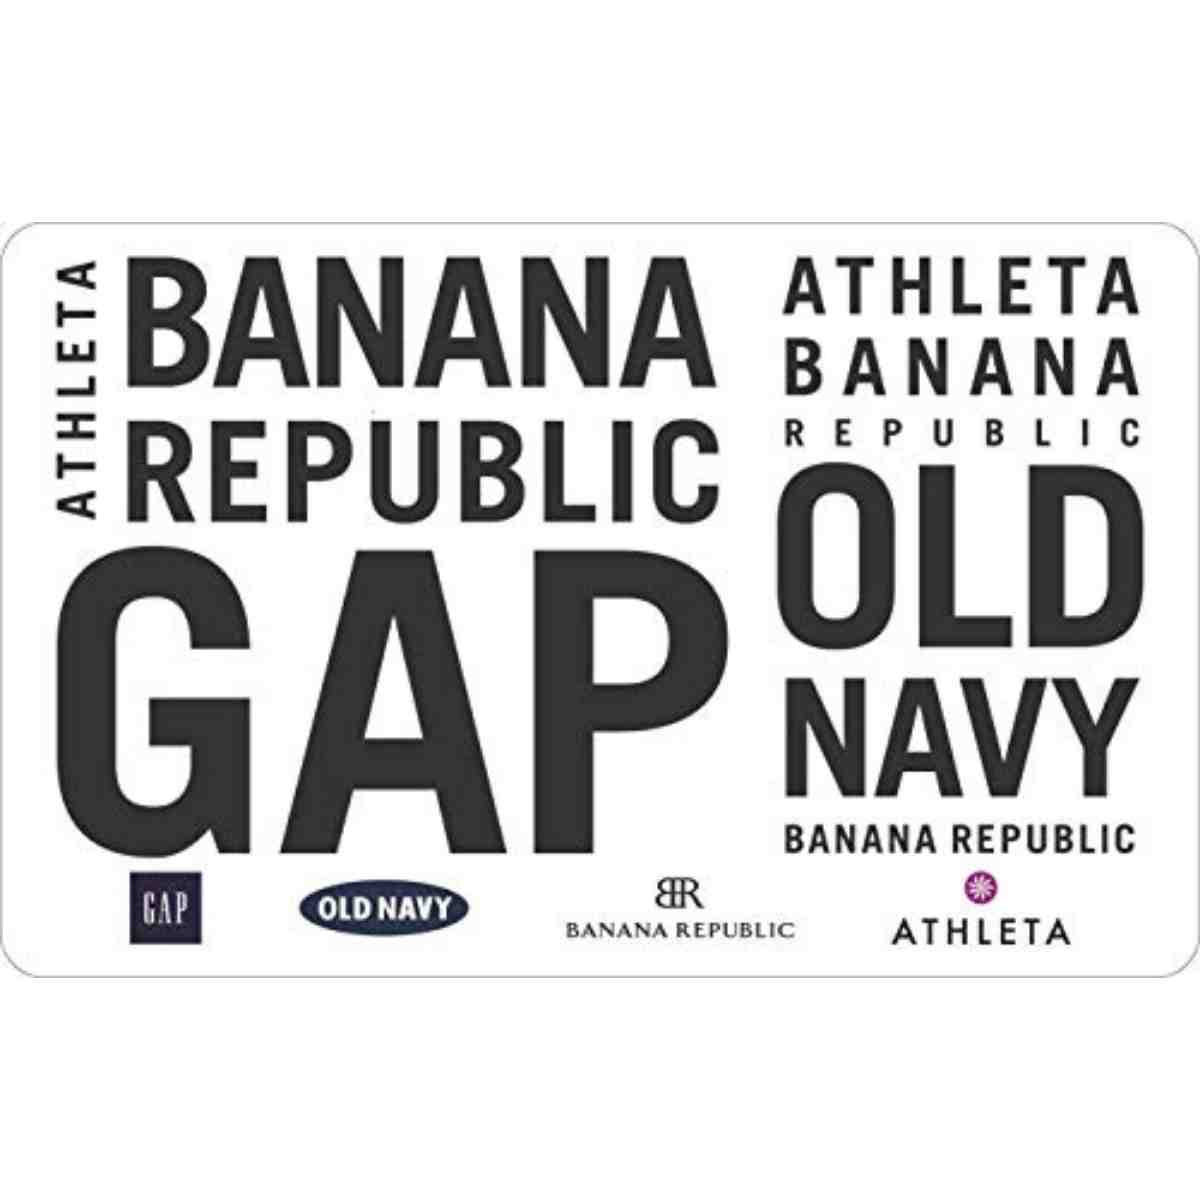 Can i use a gap gift card at old navy